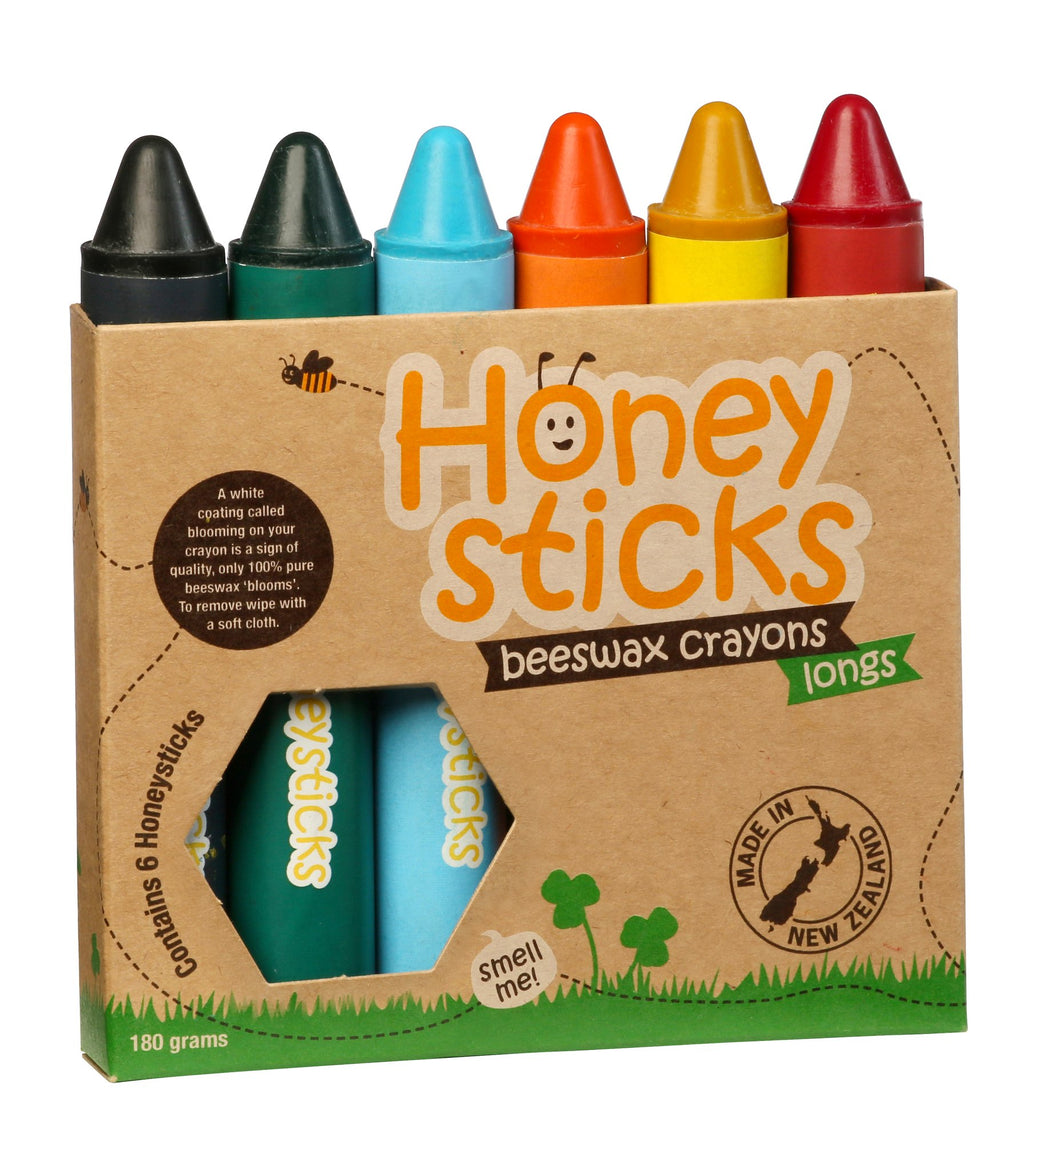 Honeysticks Longs